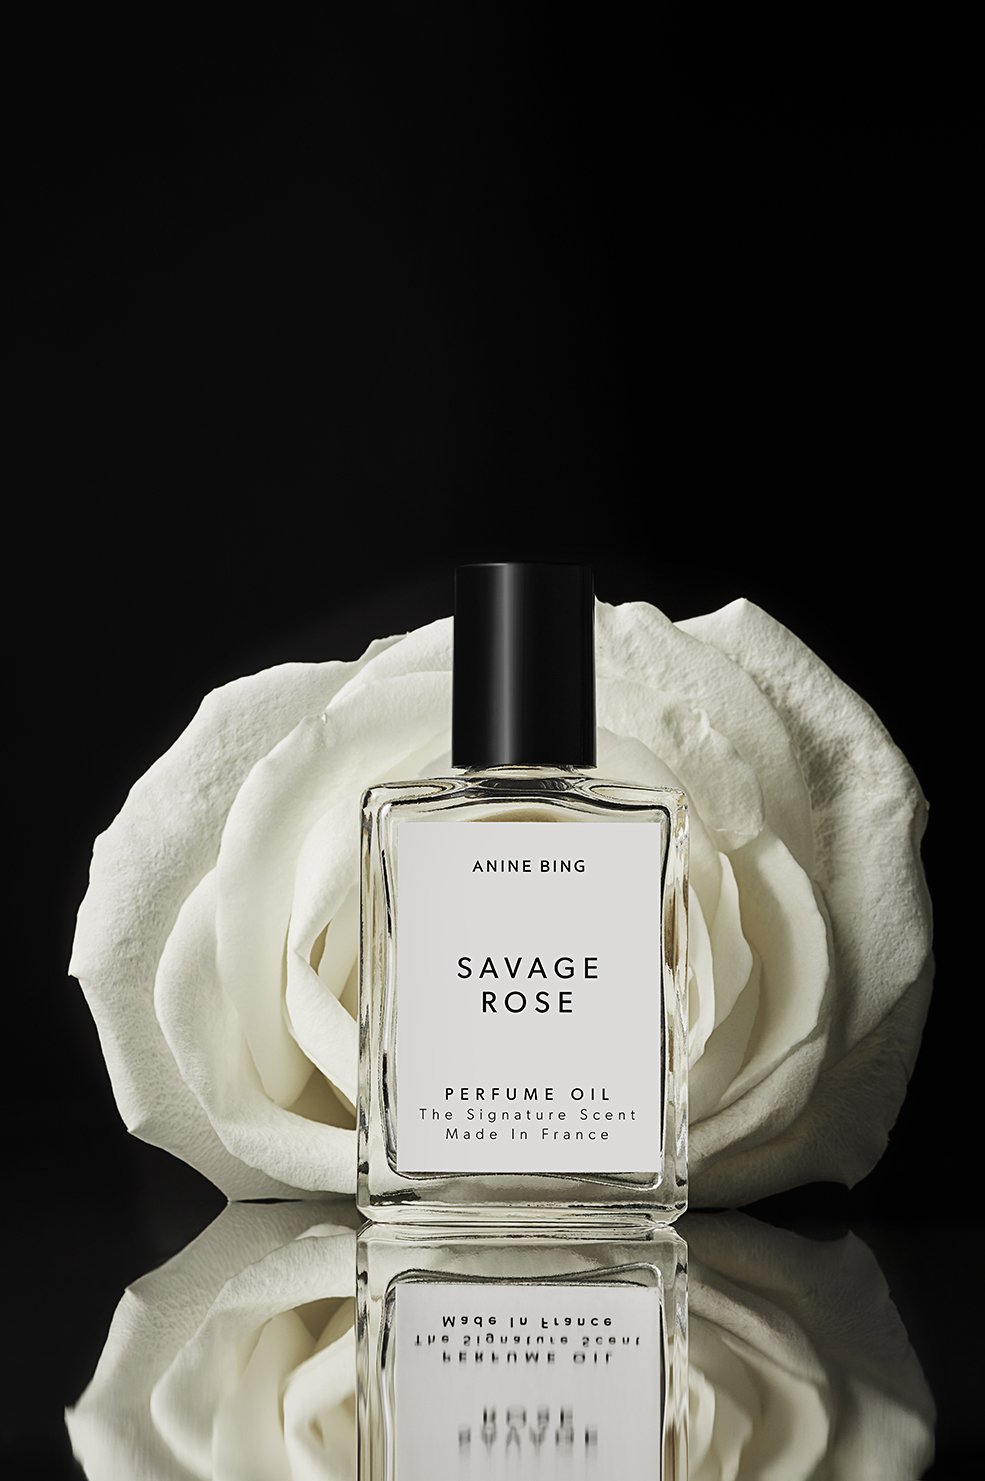 Anine Bing Savage Rose Perfume Oil